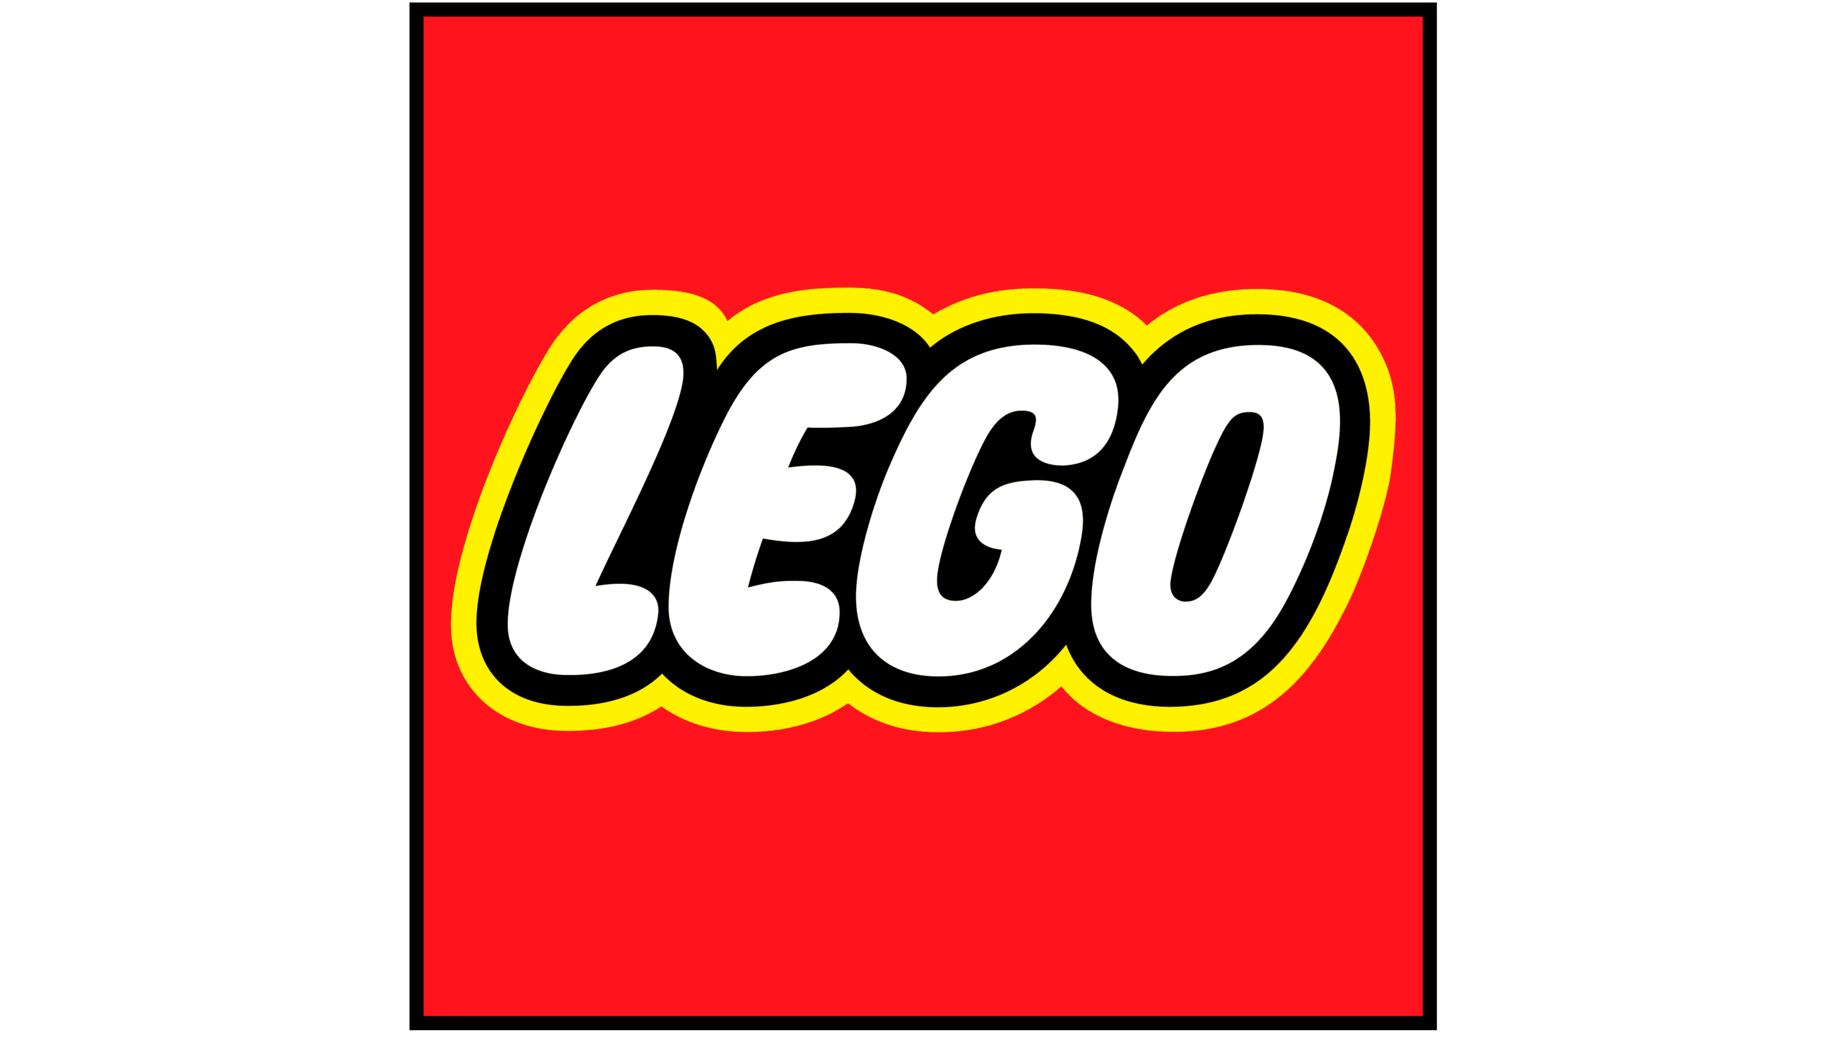 Lego sign